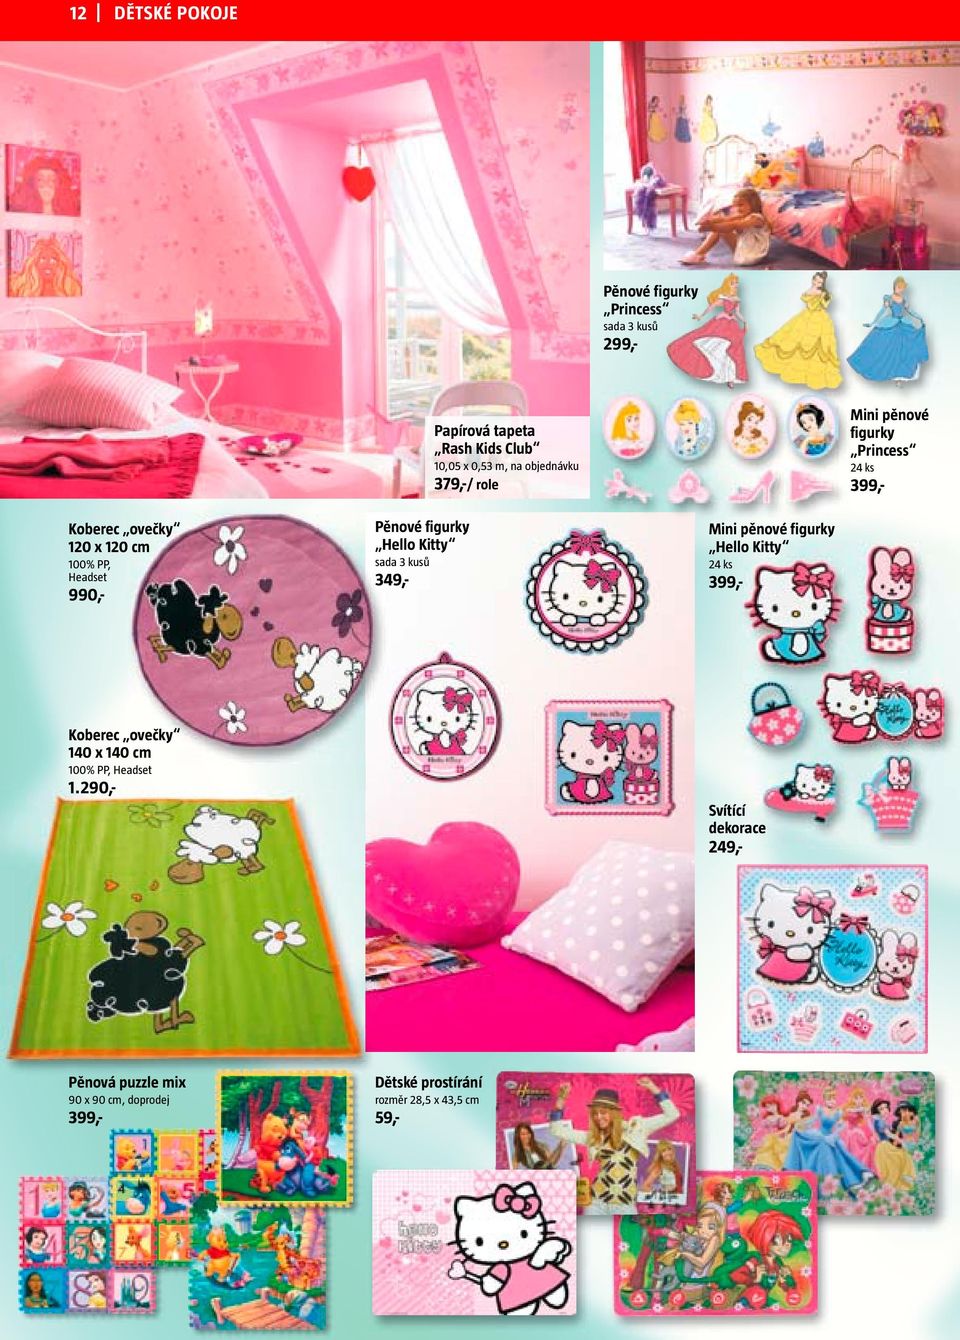 Hello Kitty sada 3 kusů 349,- Mini pěnové figurky Hello Kitty 4 ks 399,- Koberec ovečky 140 x 140 cm 100% PP, Headset